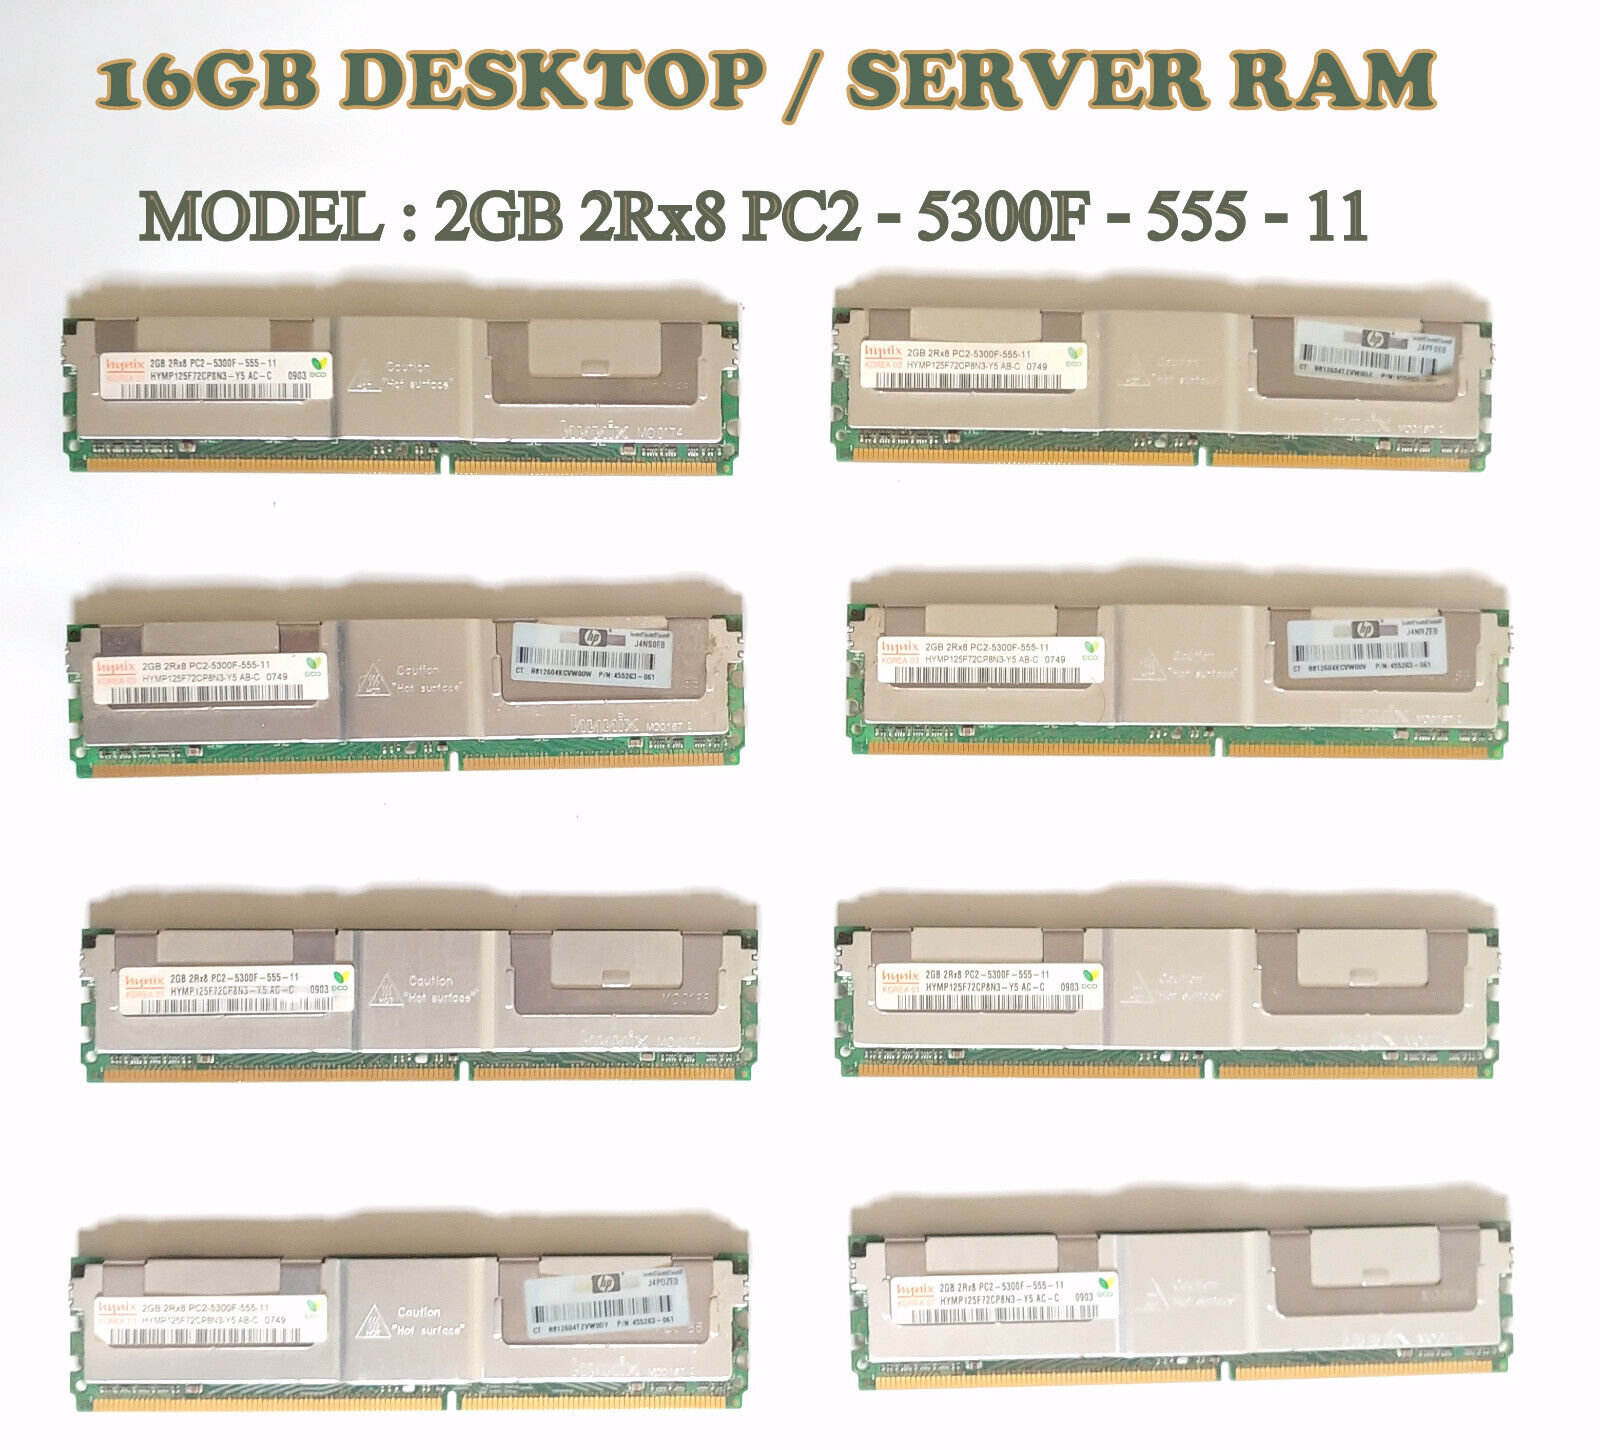 Hynix 2GB 2Rx8 PC2-5300F-555-11 RAM,  2GB RAM x 8 PIECES = 16GB RAM TOTAL.